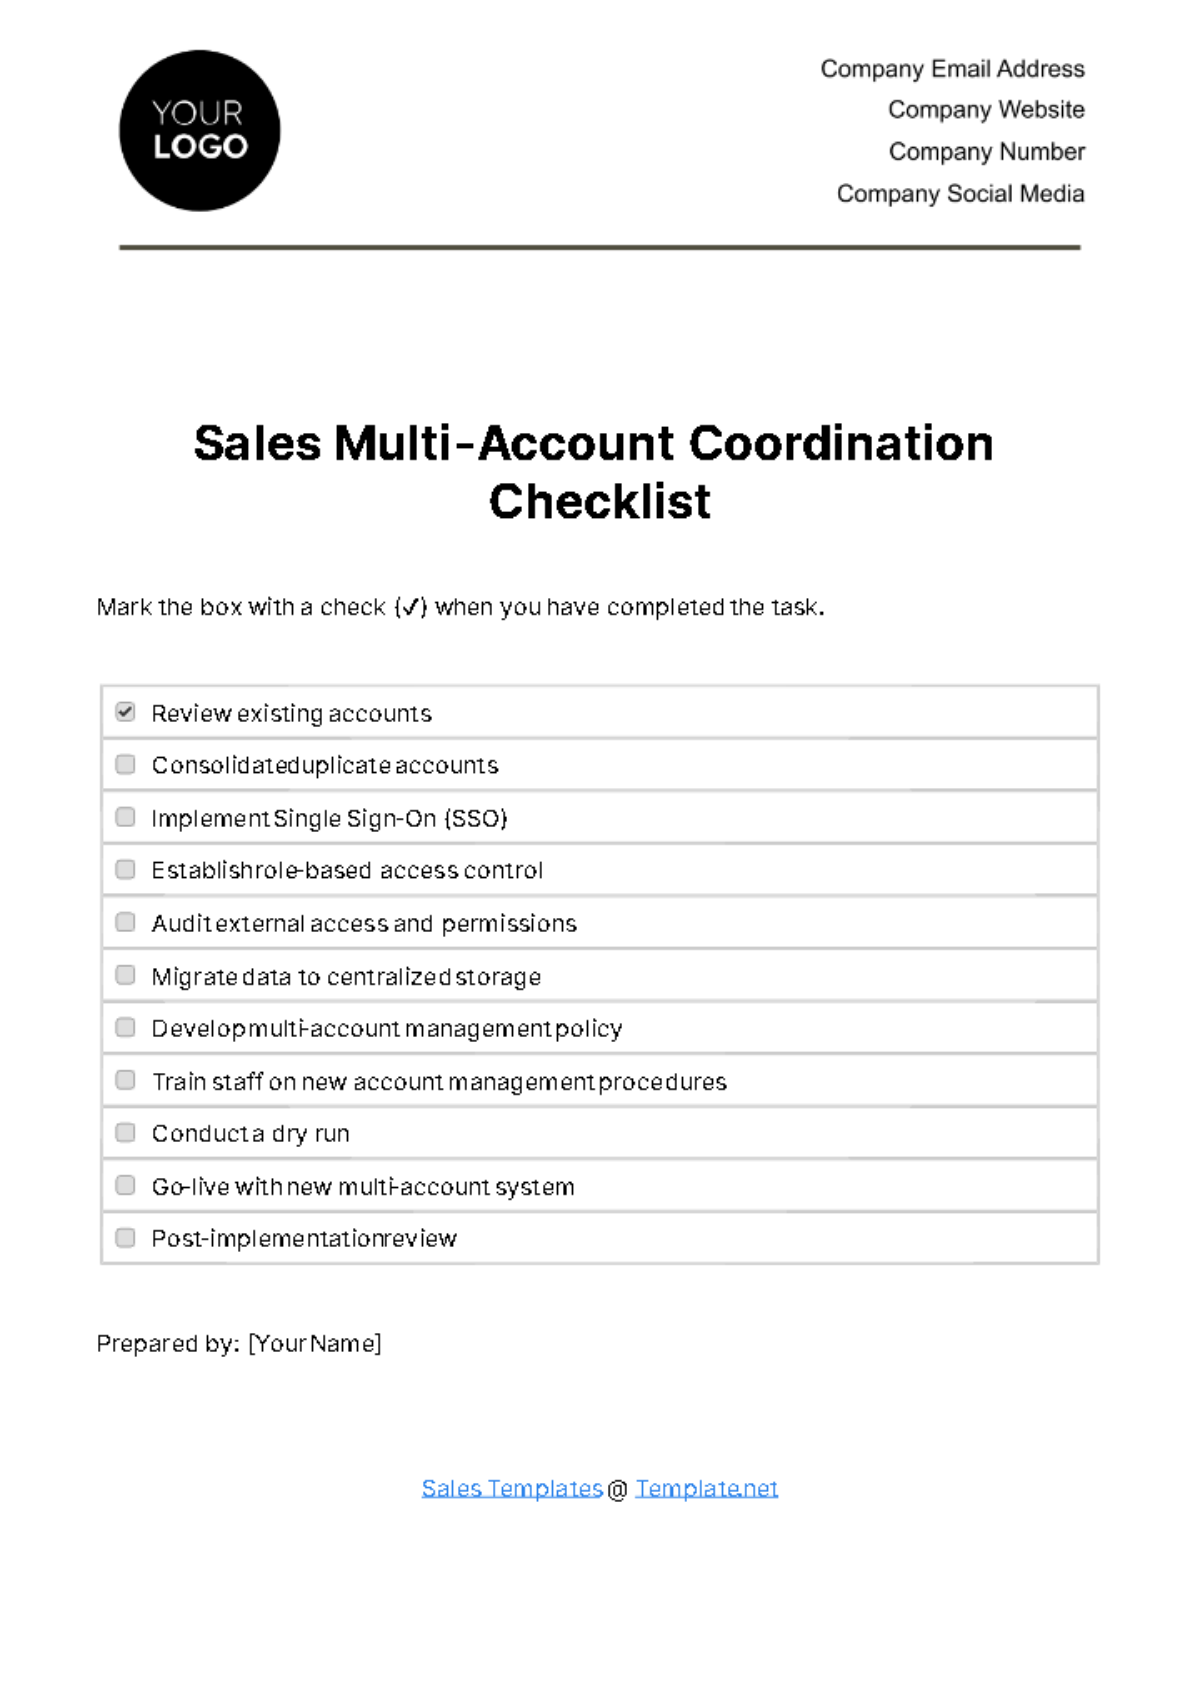 Free Sales Multi-Account Coordination Checklist Template